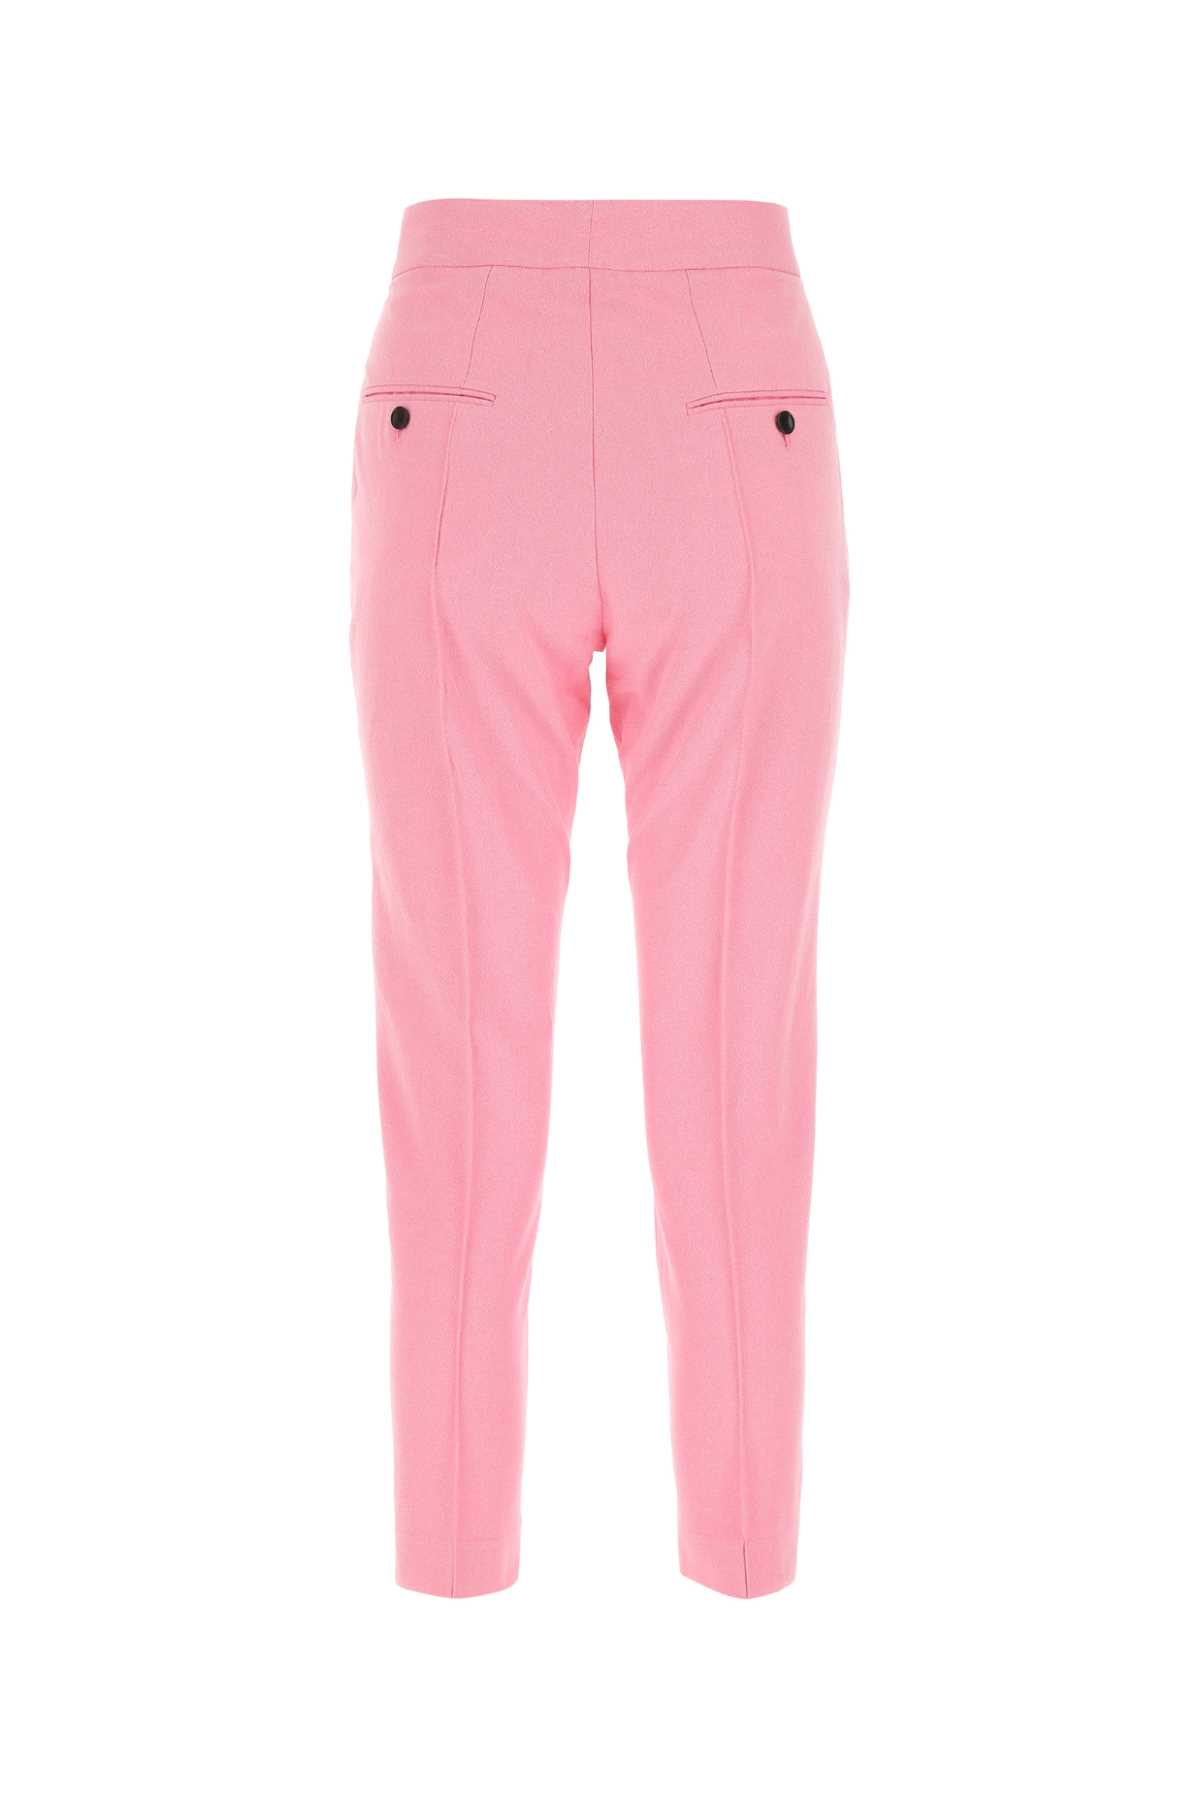 Isabel Marant Pink Viscose Blend Sioliran Trouser